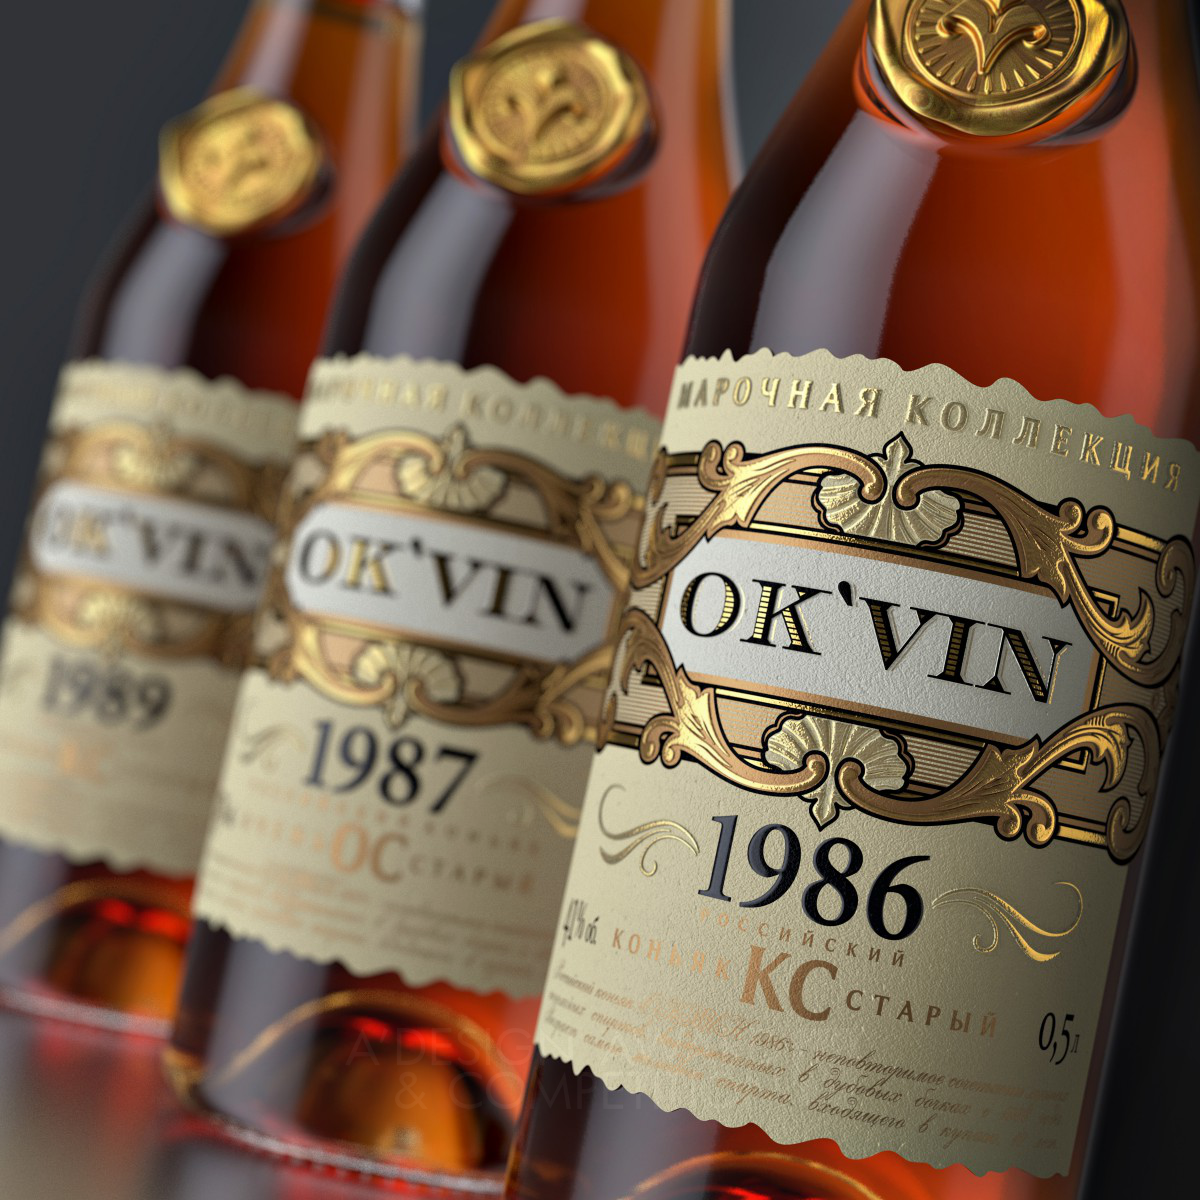 OK`VIN Limited vintage brandy by Valerii Sumilov Bronze Packaging Design Award Winner 2016 